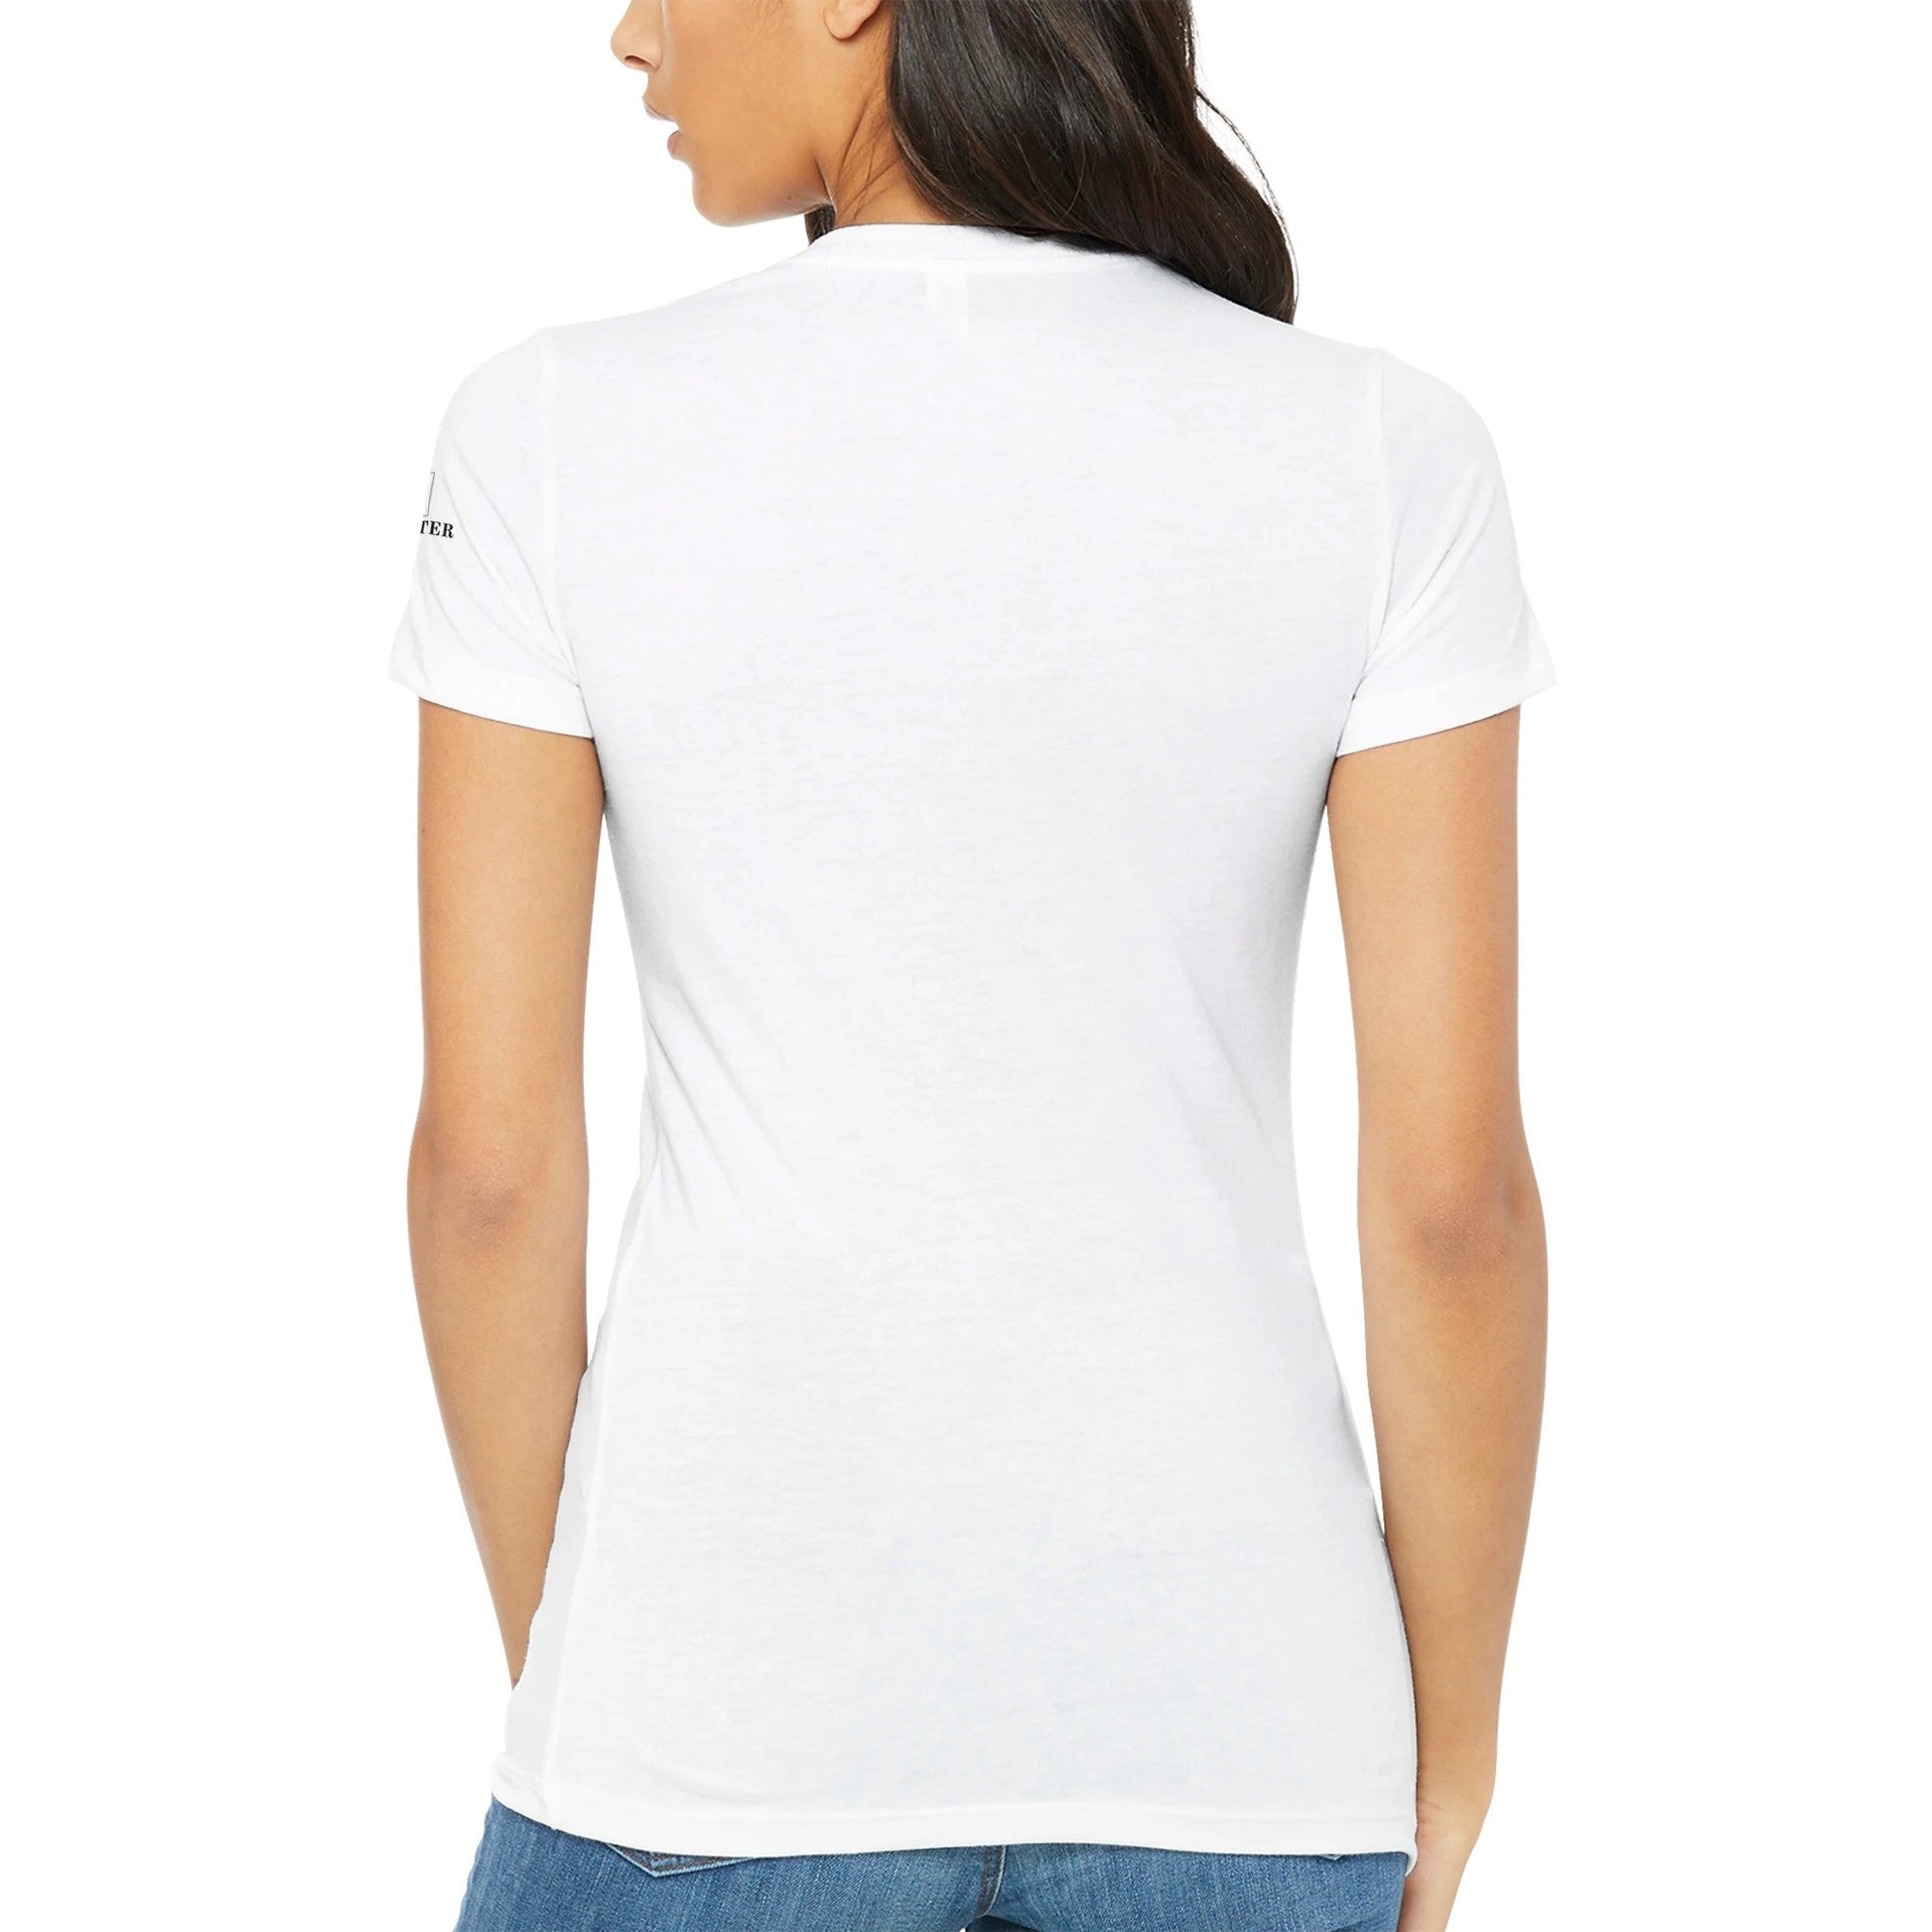 Premium Women's Crewneck T-shirt with Doberman logo - Hobbster